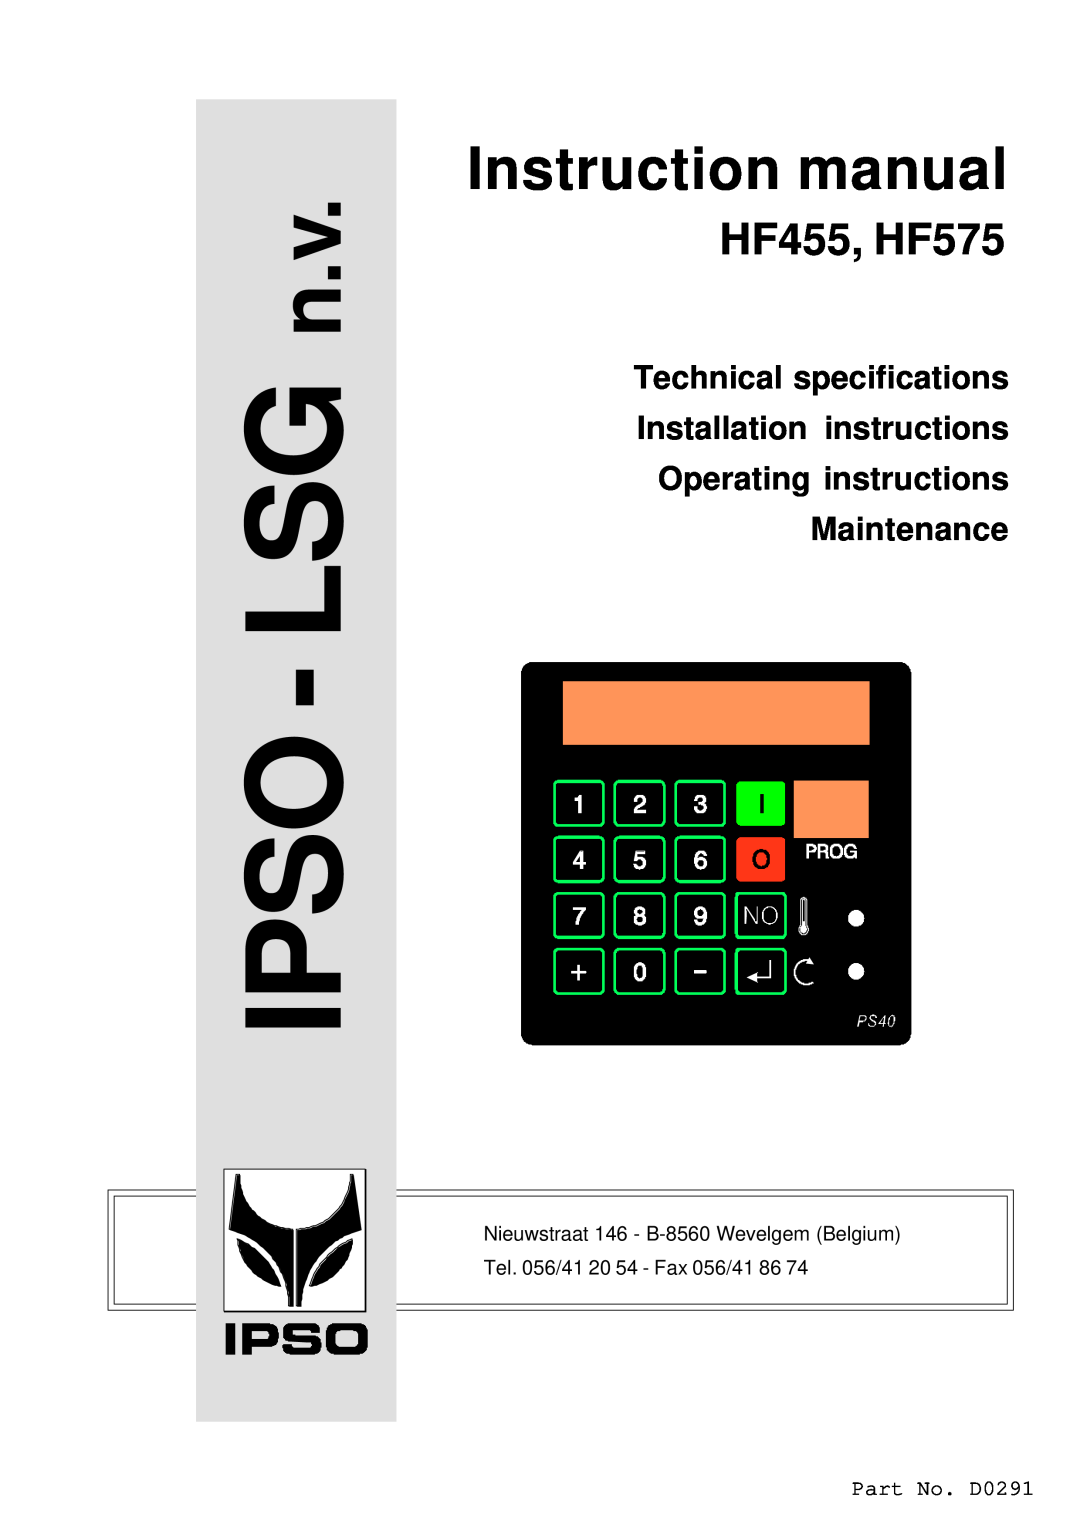 Cissell manual IPSO - LSG n.v, Instruction manual, HF455, HF575, Technical specifications Installation instructions 